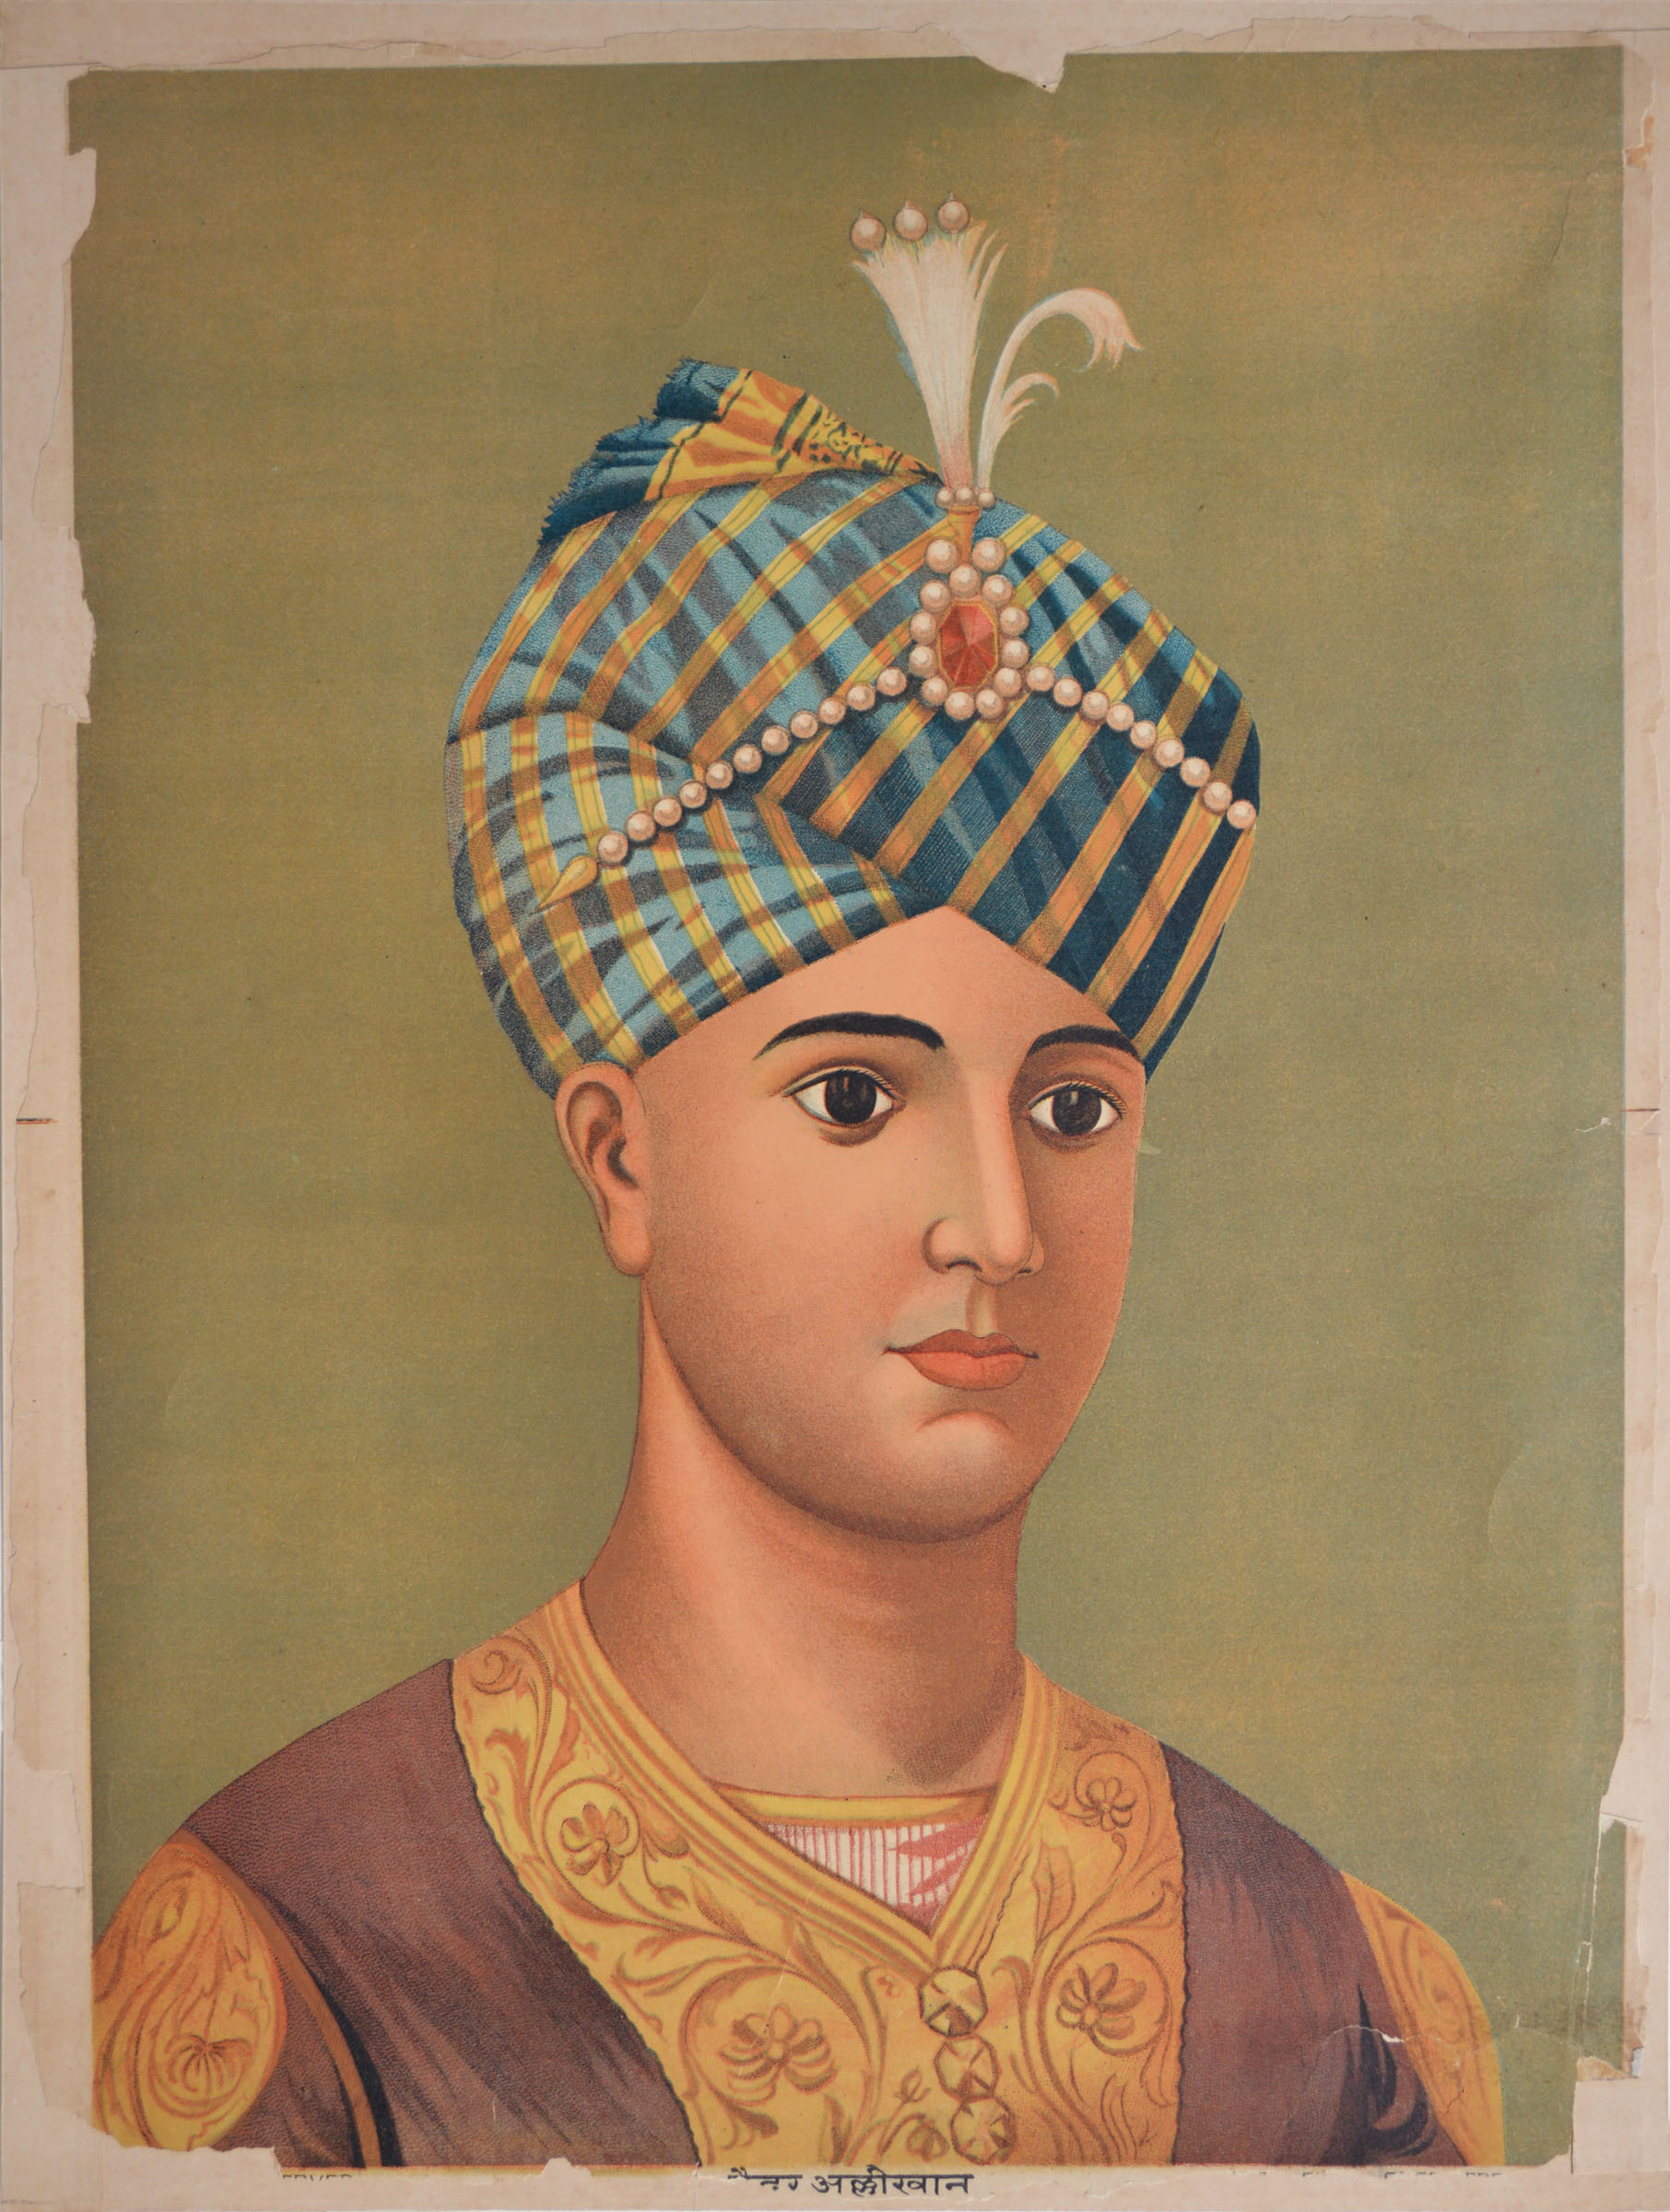 Hyder Ali Khan (c. 1720-1782)